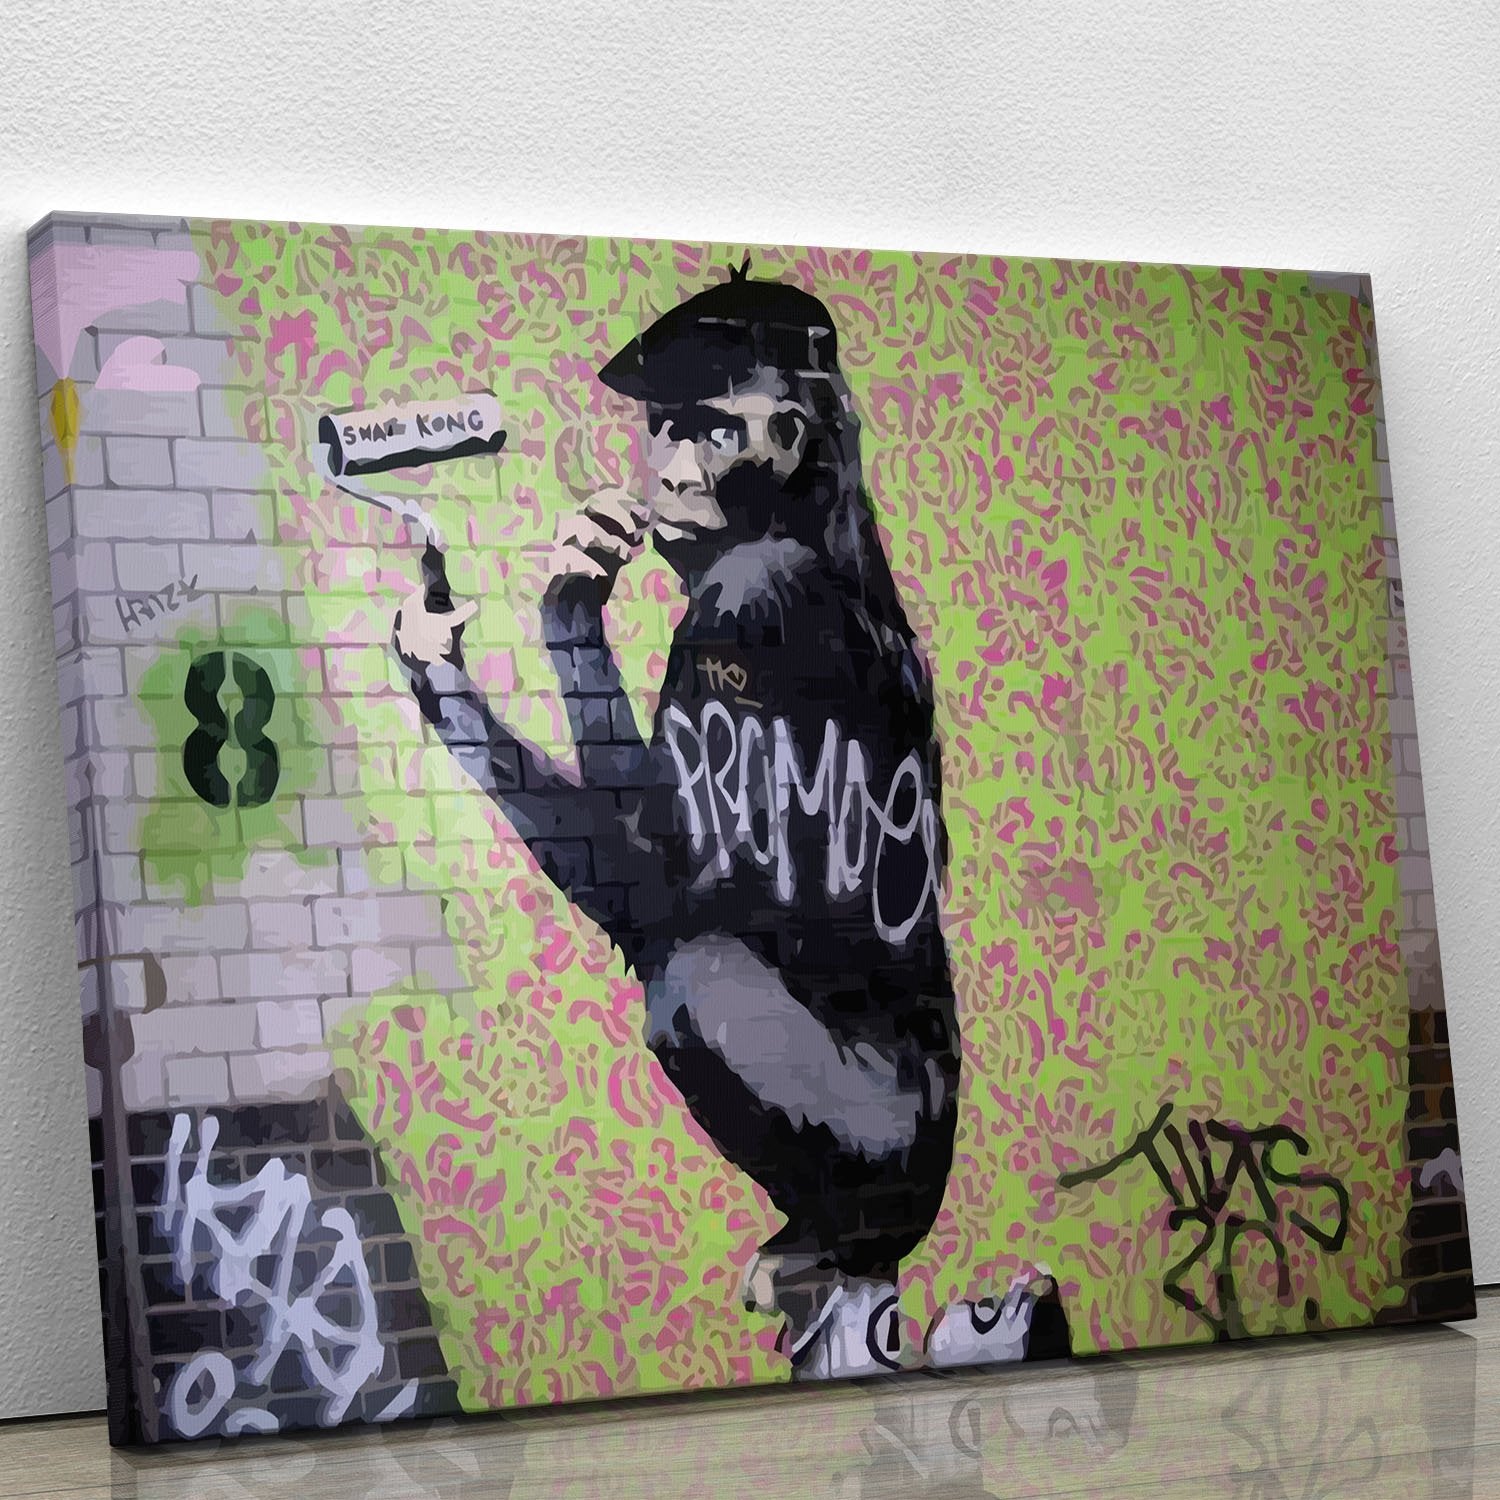 Banksy Gorilla Artist Canvas Print or Poster